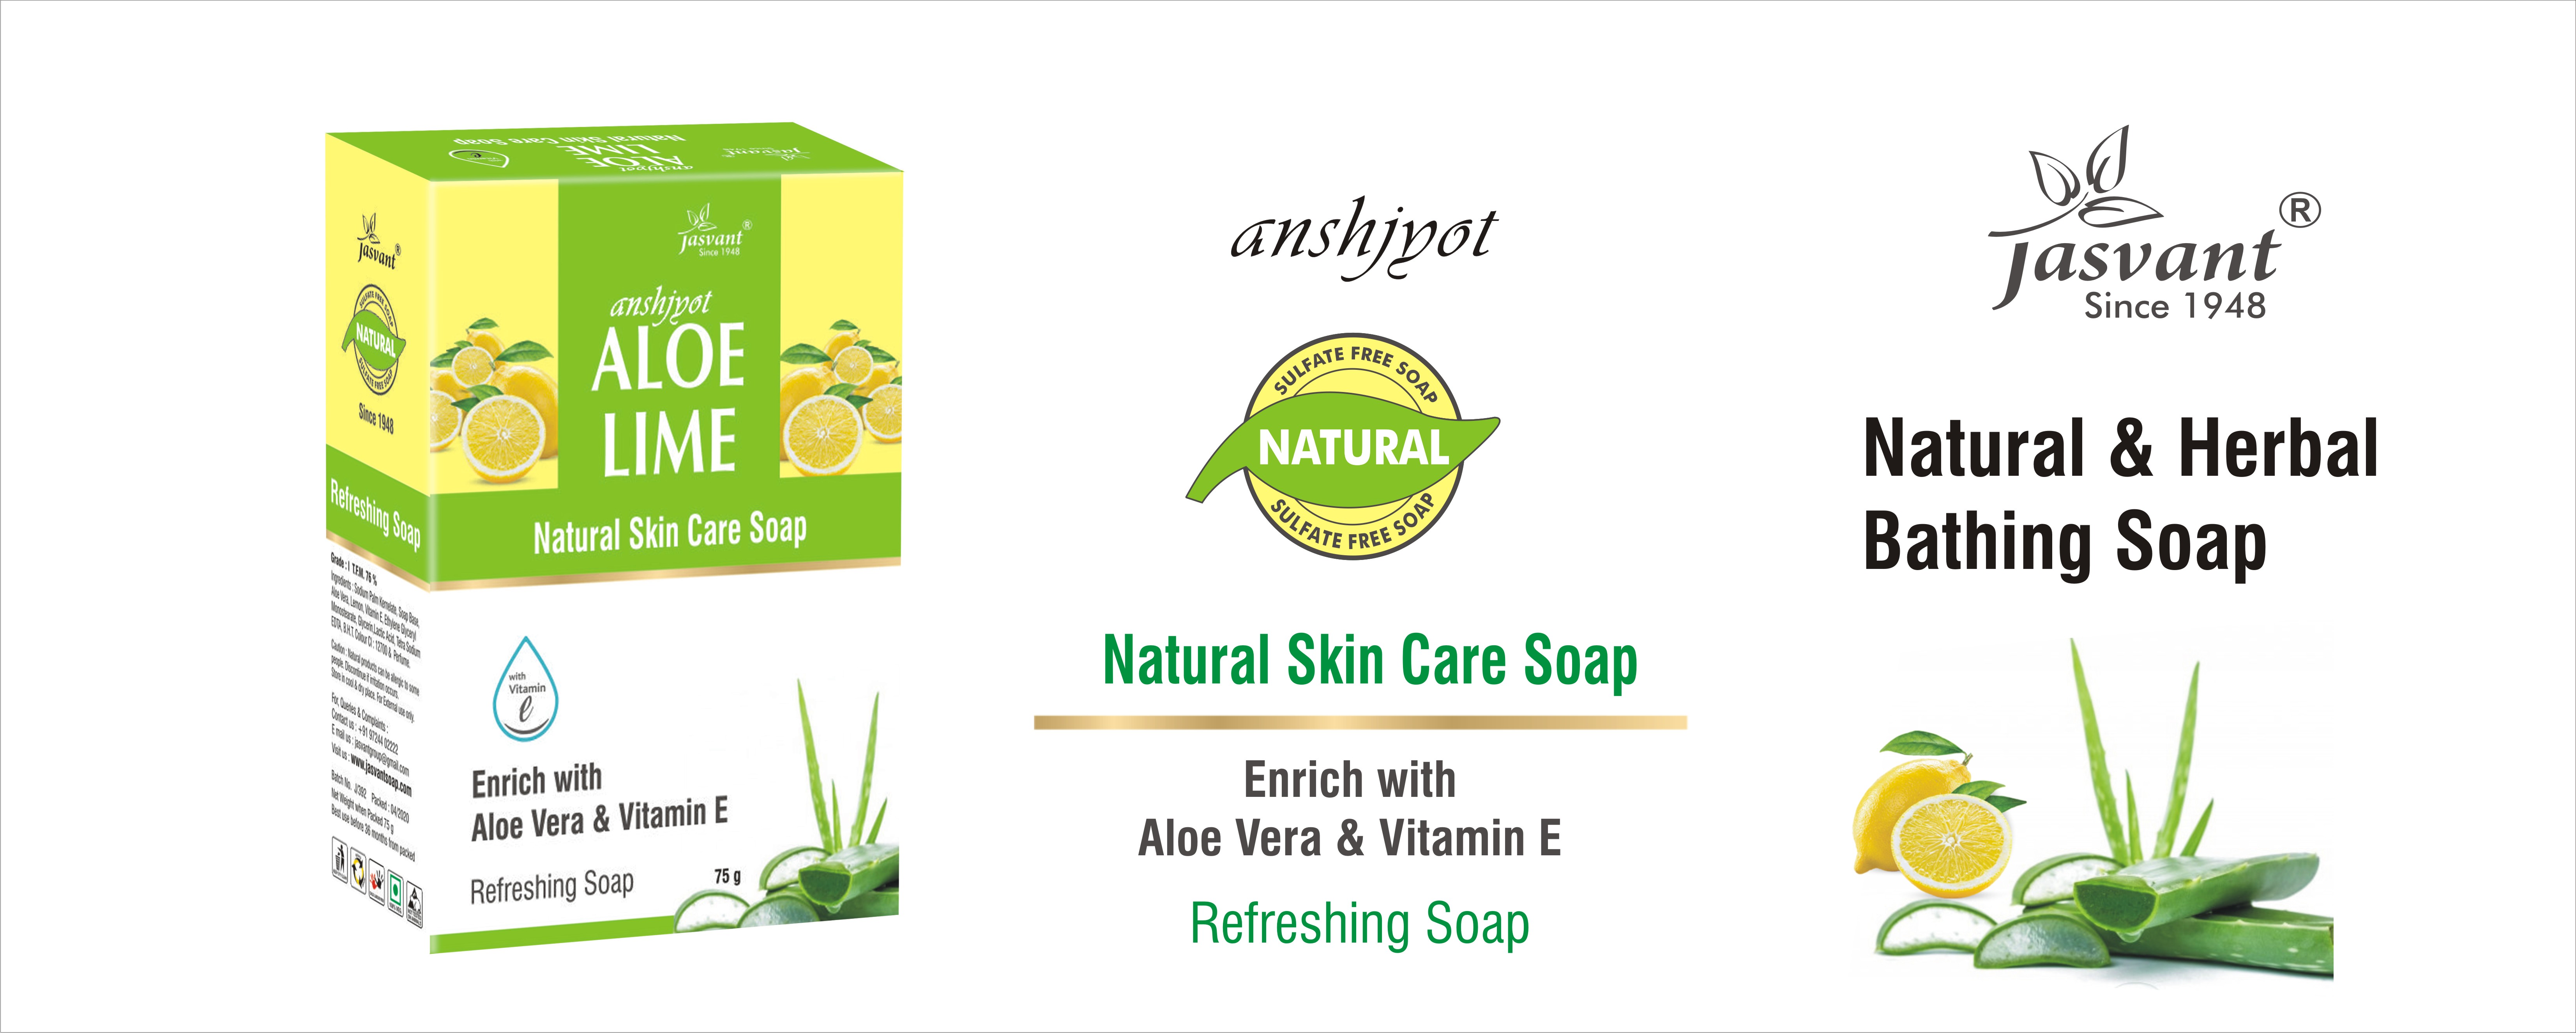 Aloe Lime Skin Care Refreshing Soap